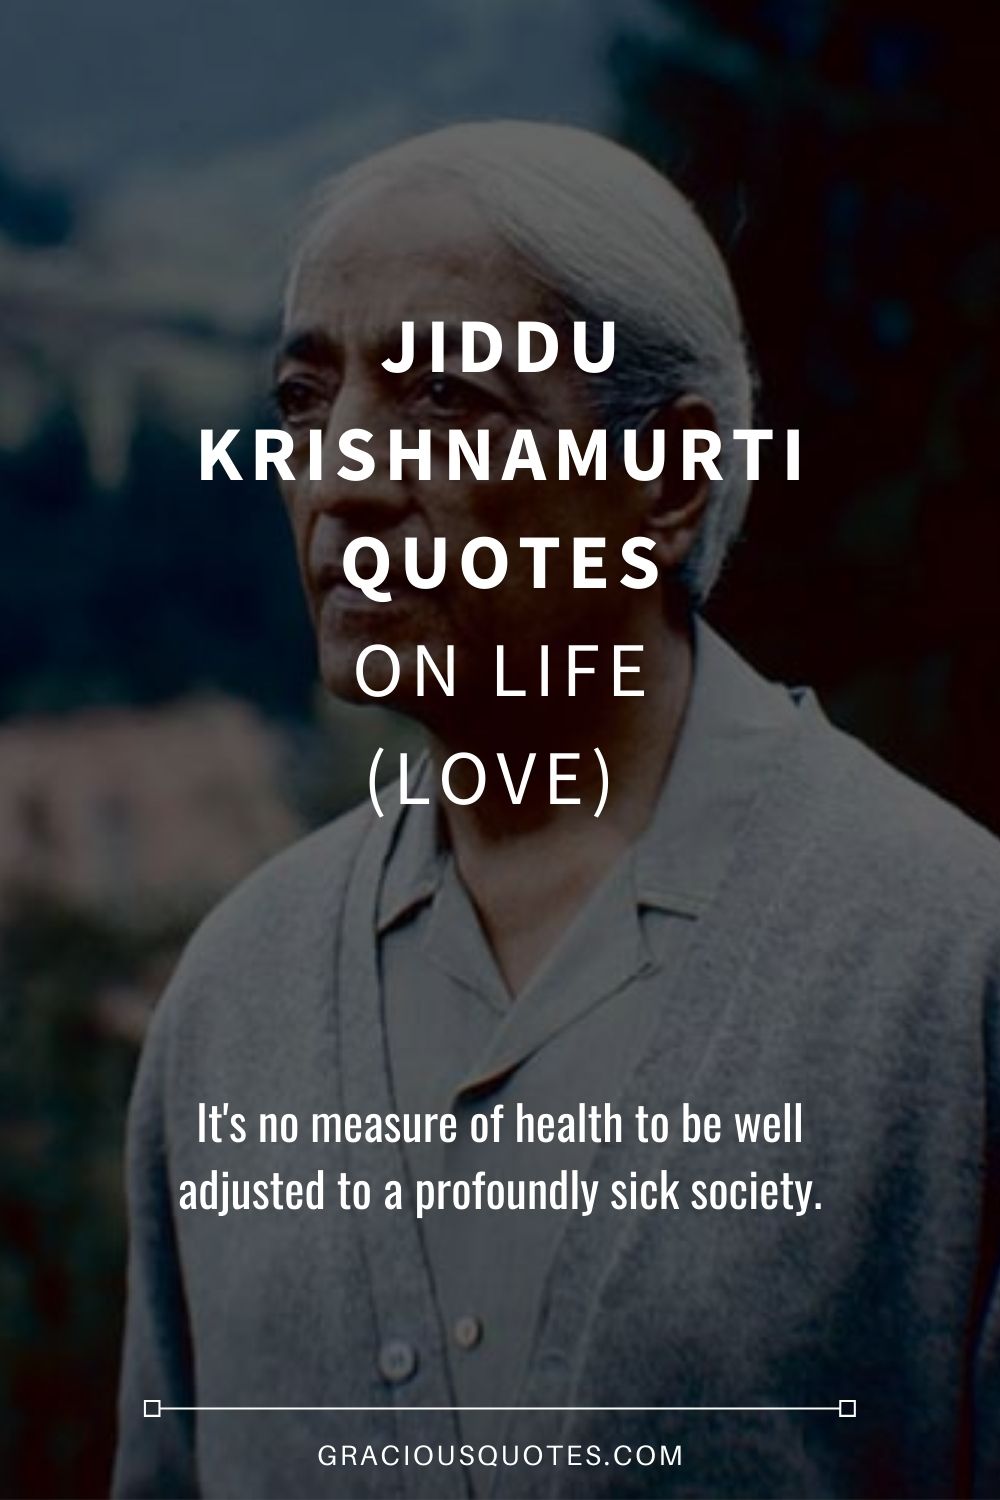 Jiddu Krishnamurti Quotes on Life (LOVE) - Gracious Quotes